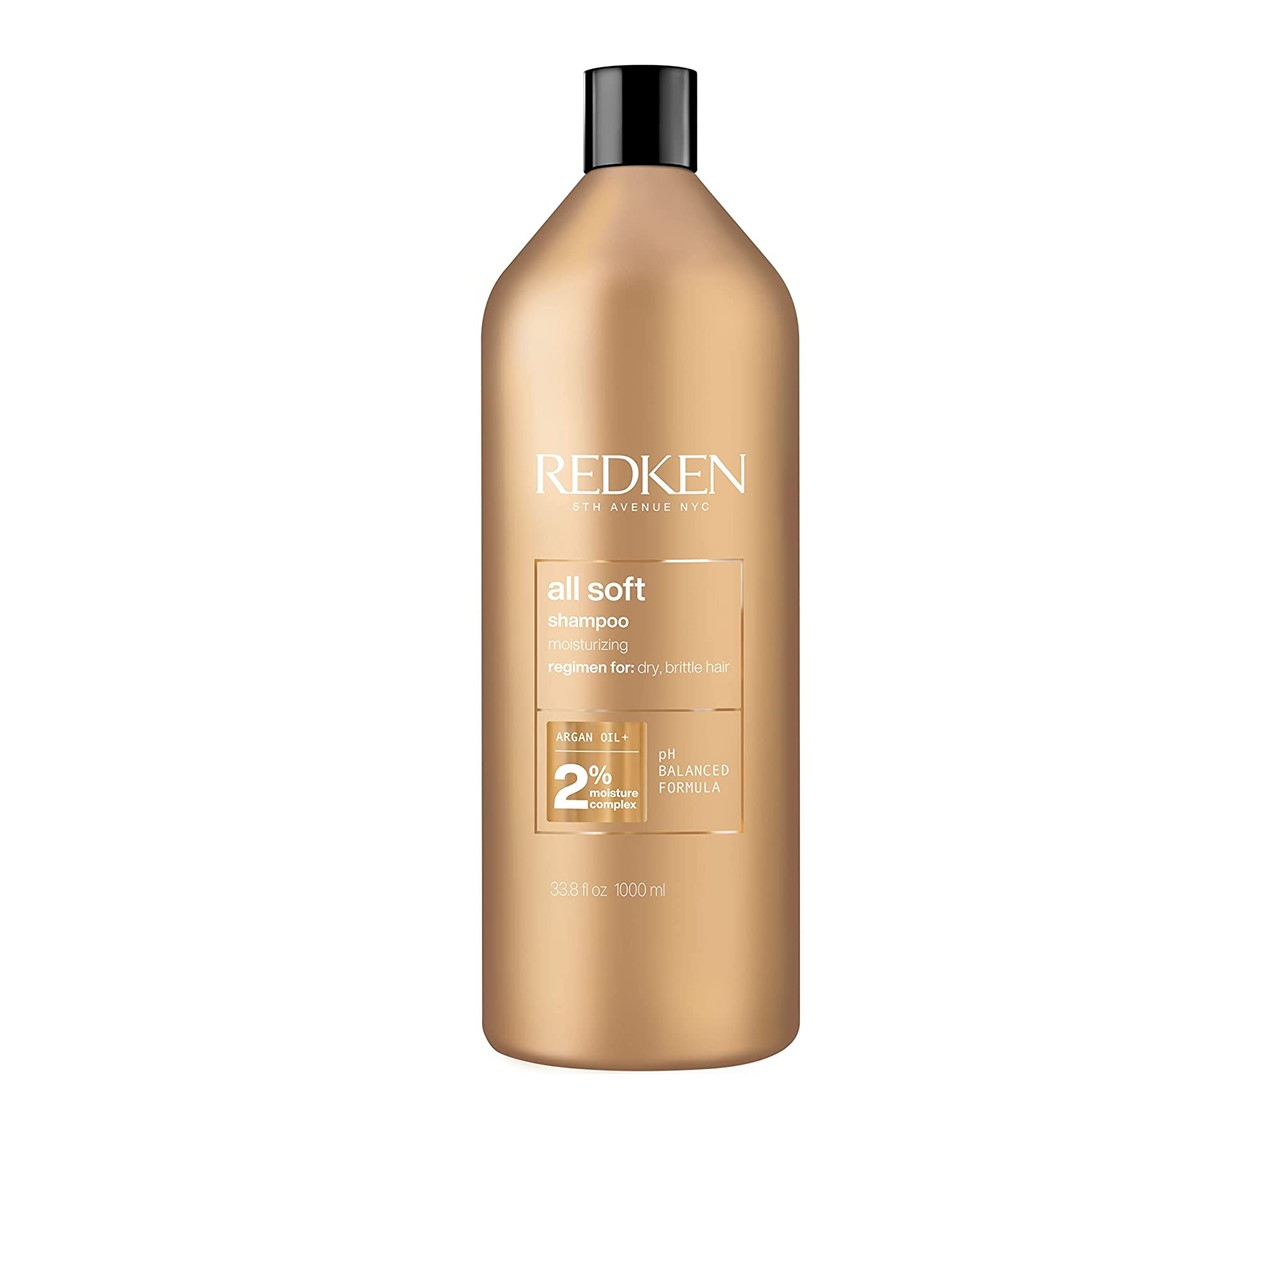 Redken All Soft Shampoo 1L (33.81fl oz)